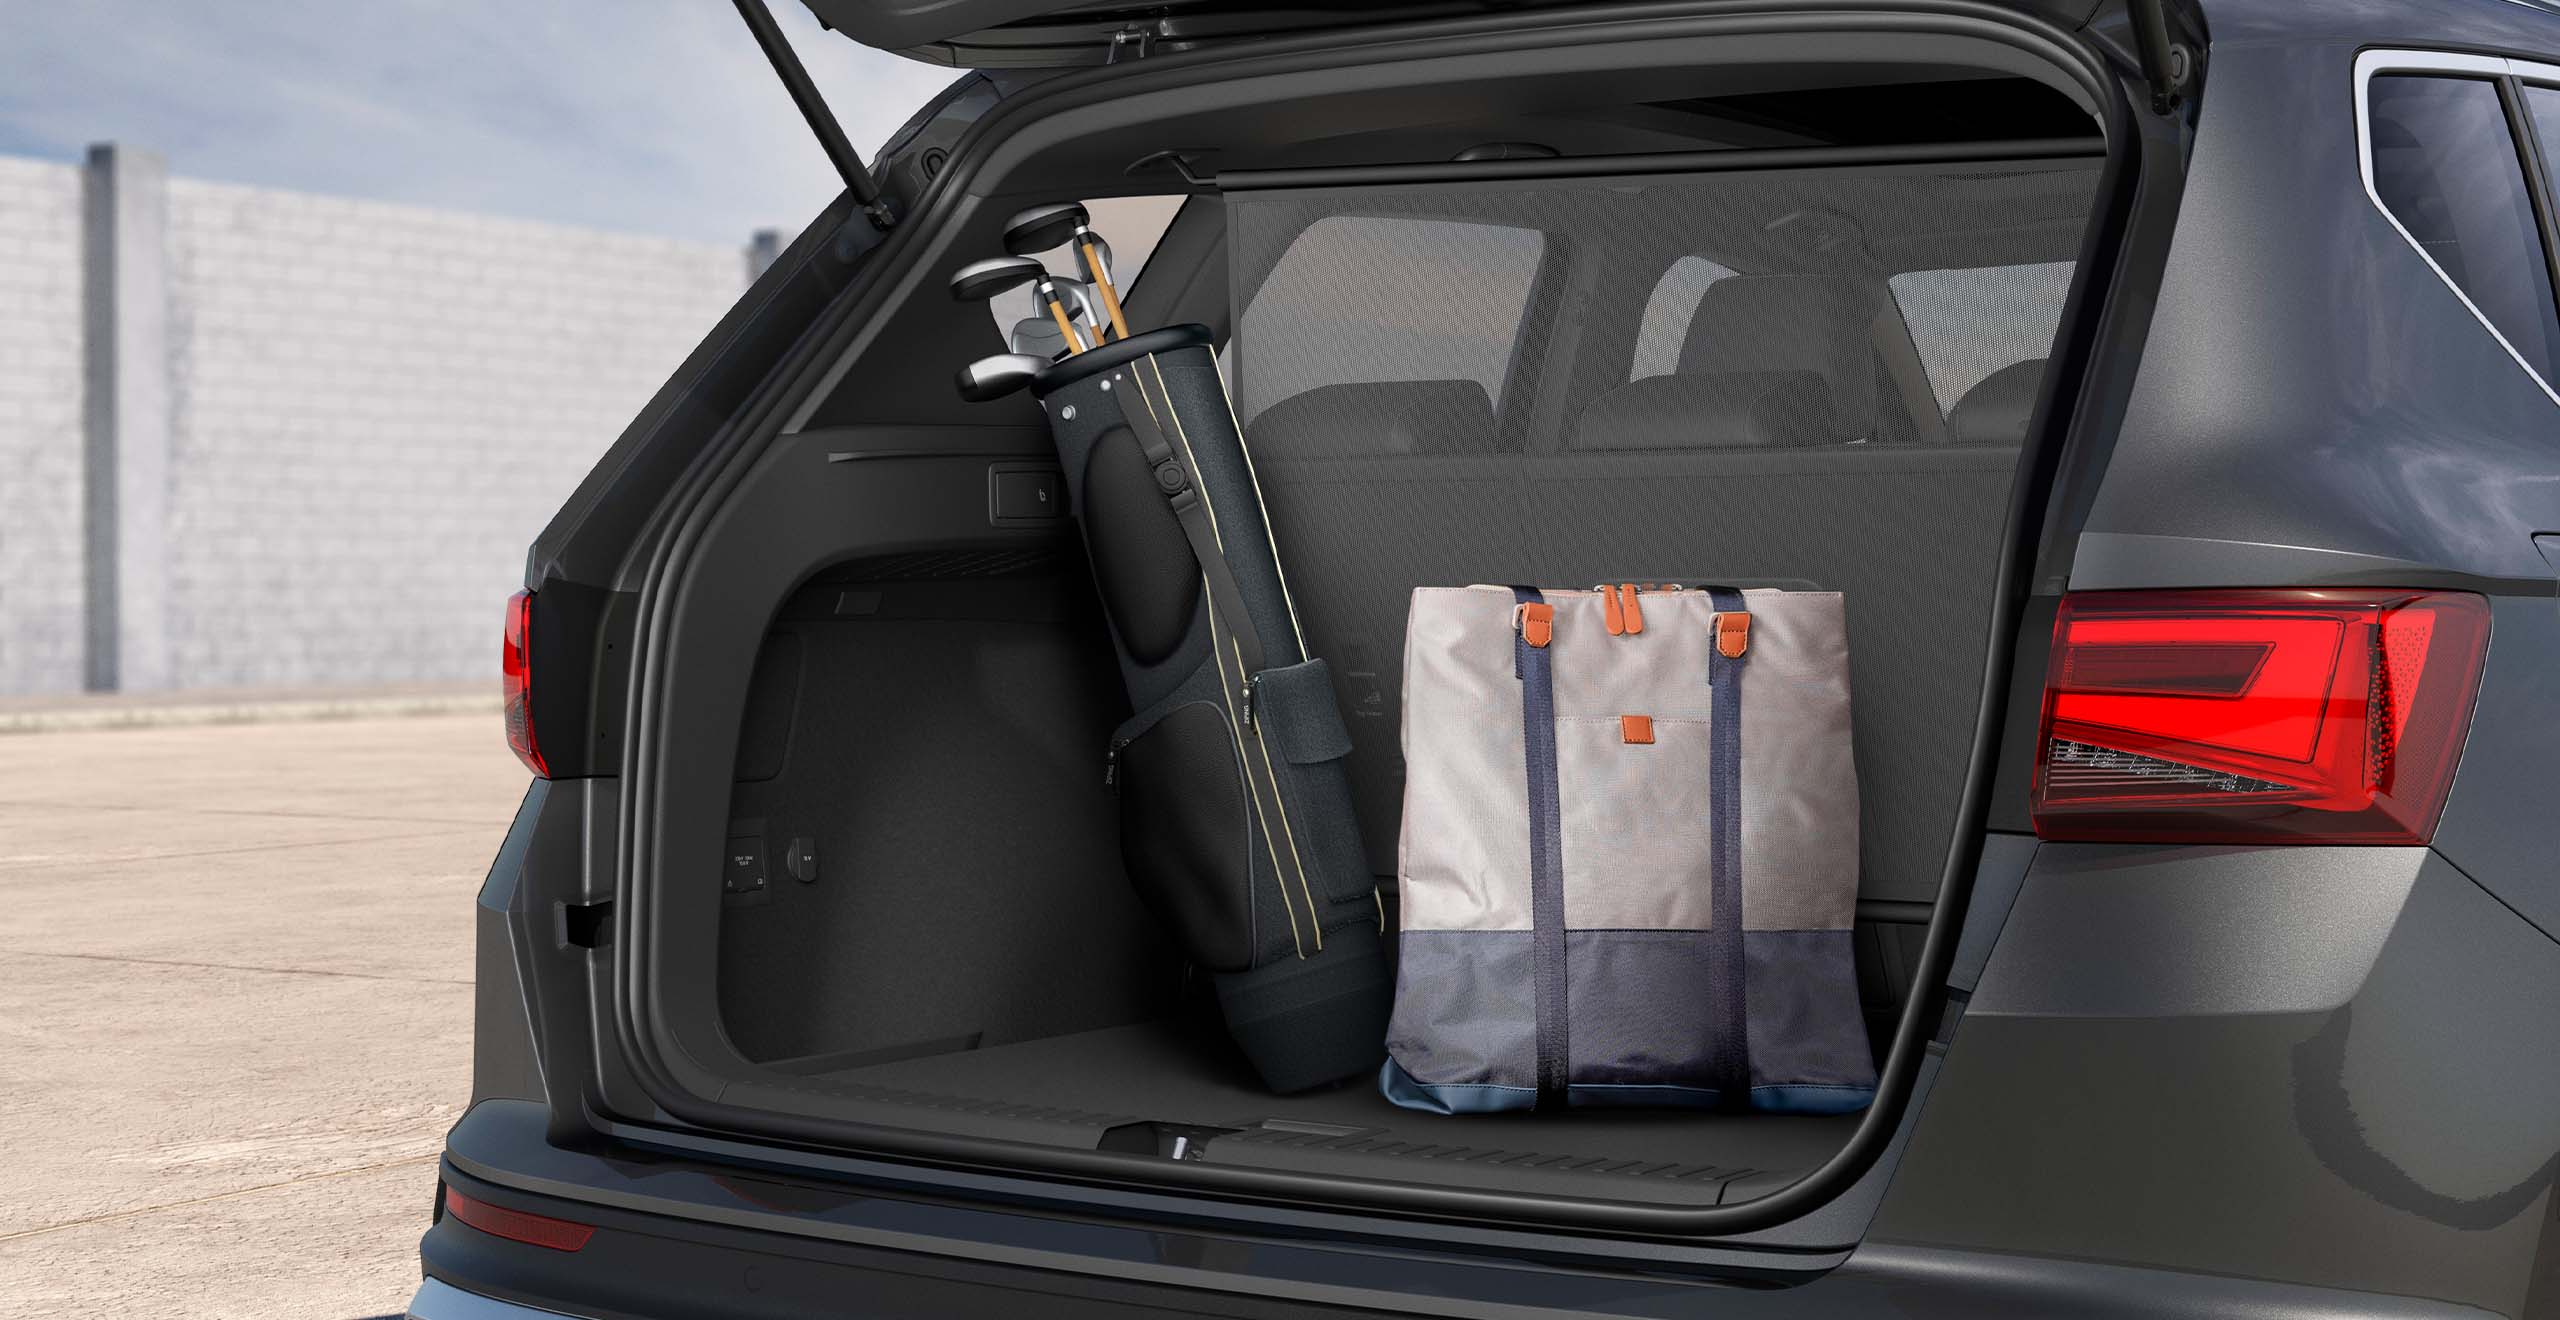 SEAT Ateca SUV rodium grey colour boot space